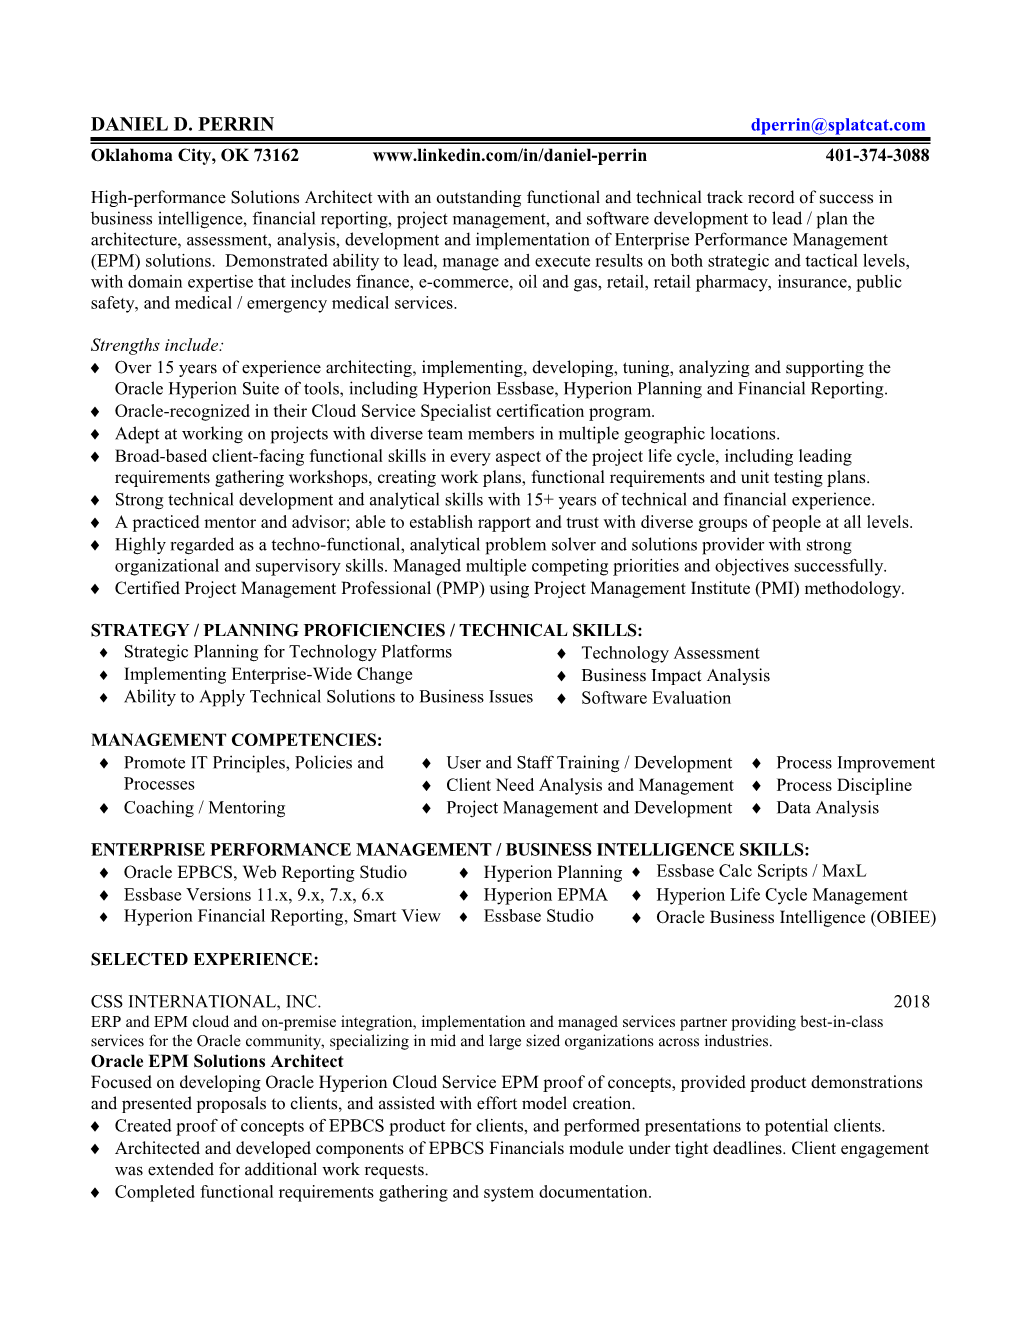 Resume for Daniel Perrin Business Intelligence, Enterprise Performance Management (EPM)